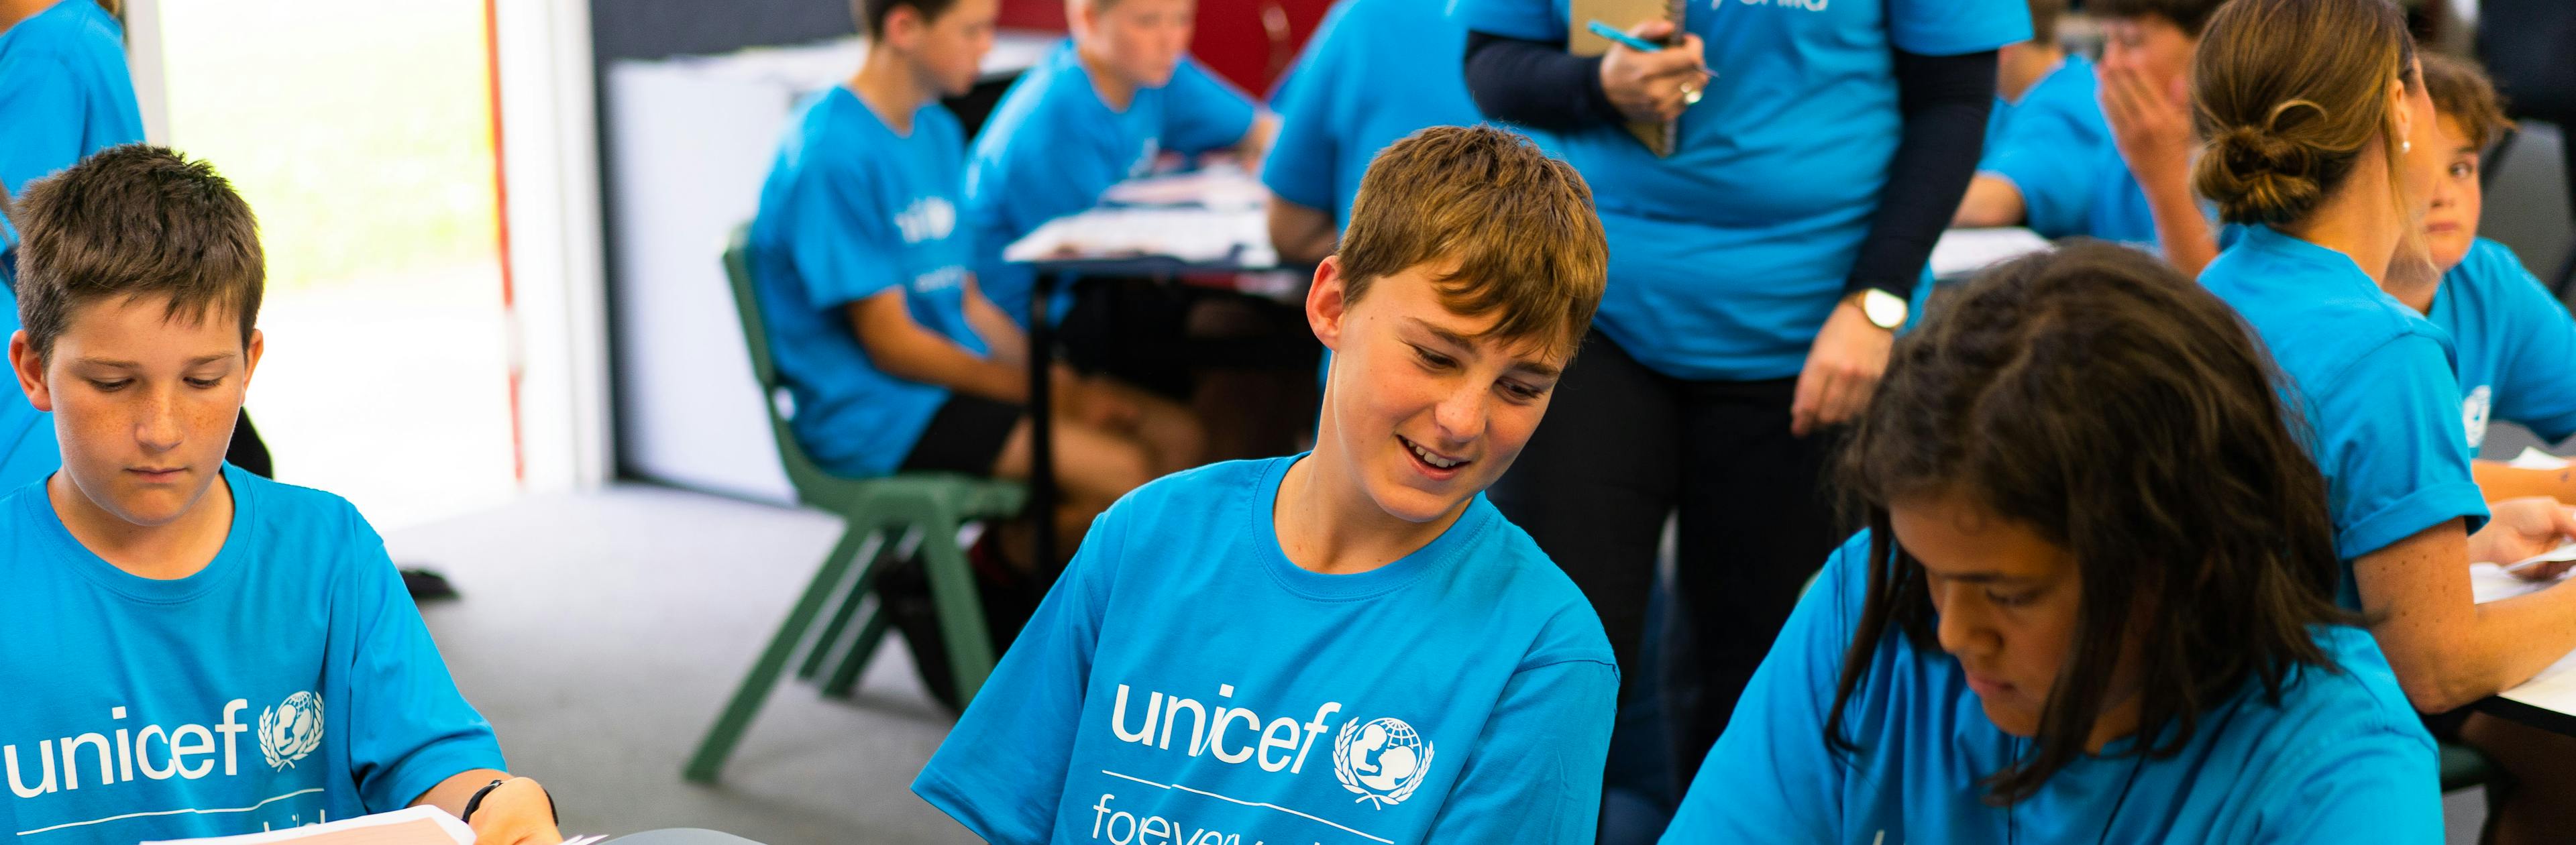 Child Rights - UNICEF Aotearoa visits Poipoi School